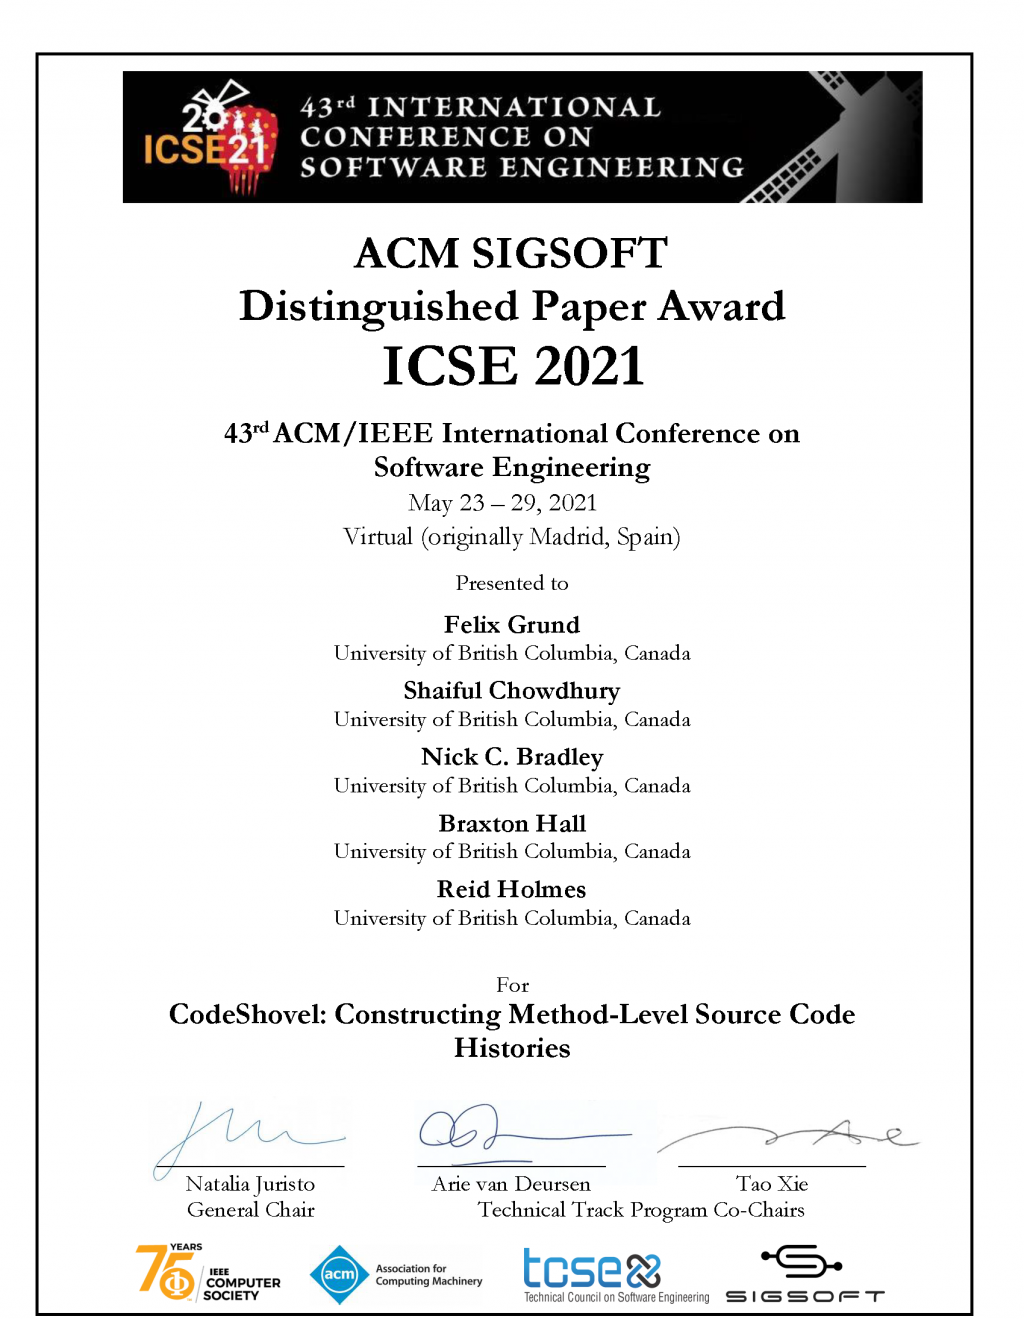 CodeShovel Certificate